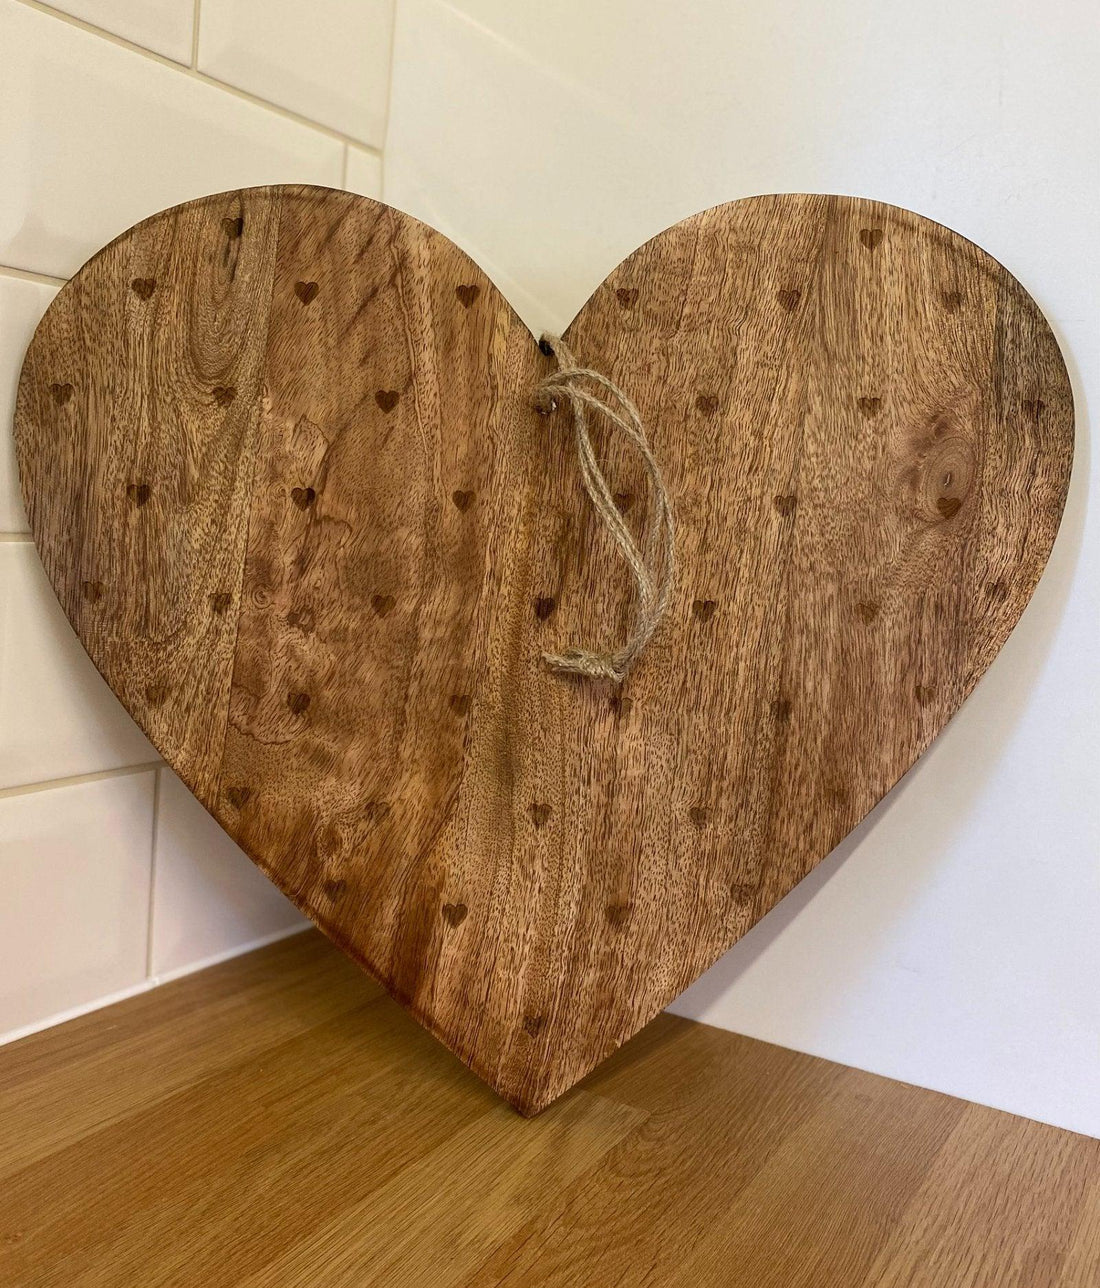 Heart Shaped Wooden Chopping Board 40cm - £28.99 - Trays & Chopping Boards 